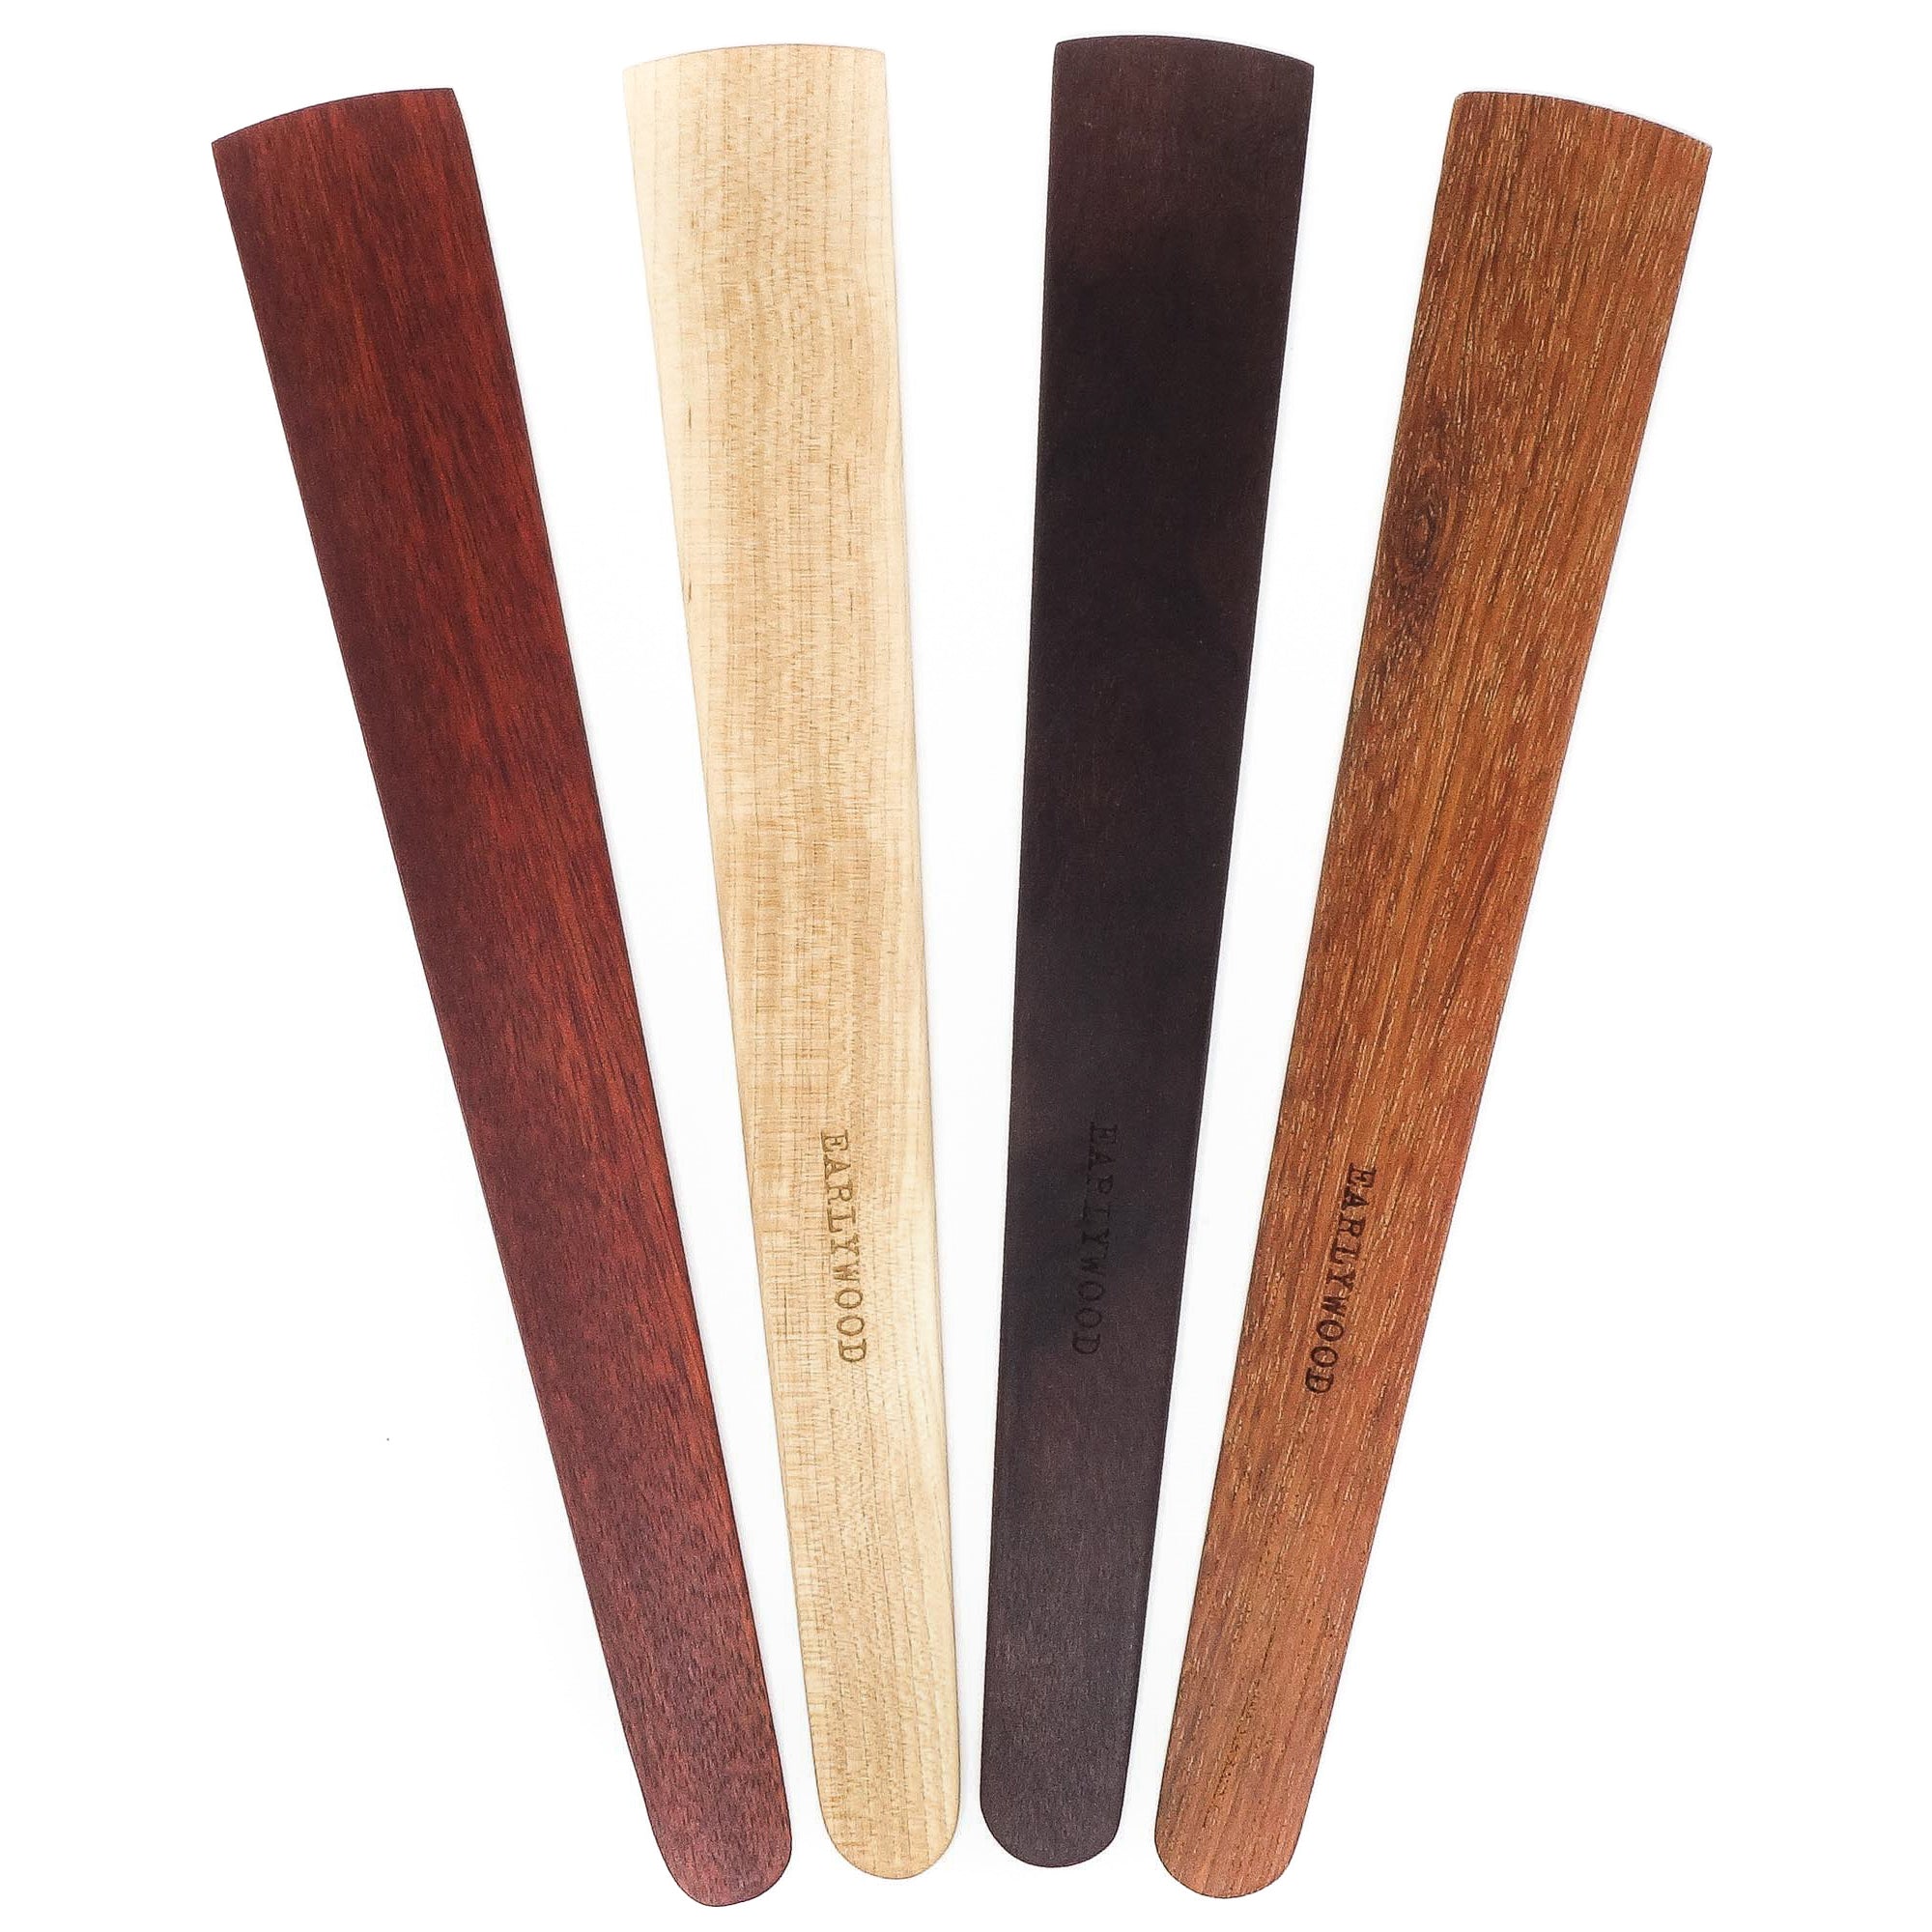 4-piece kitchen utensil set in hardwoods - Earlywood